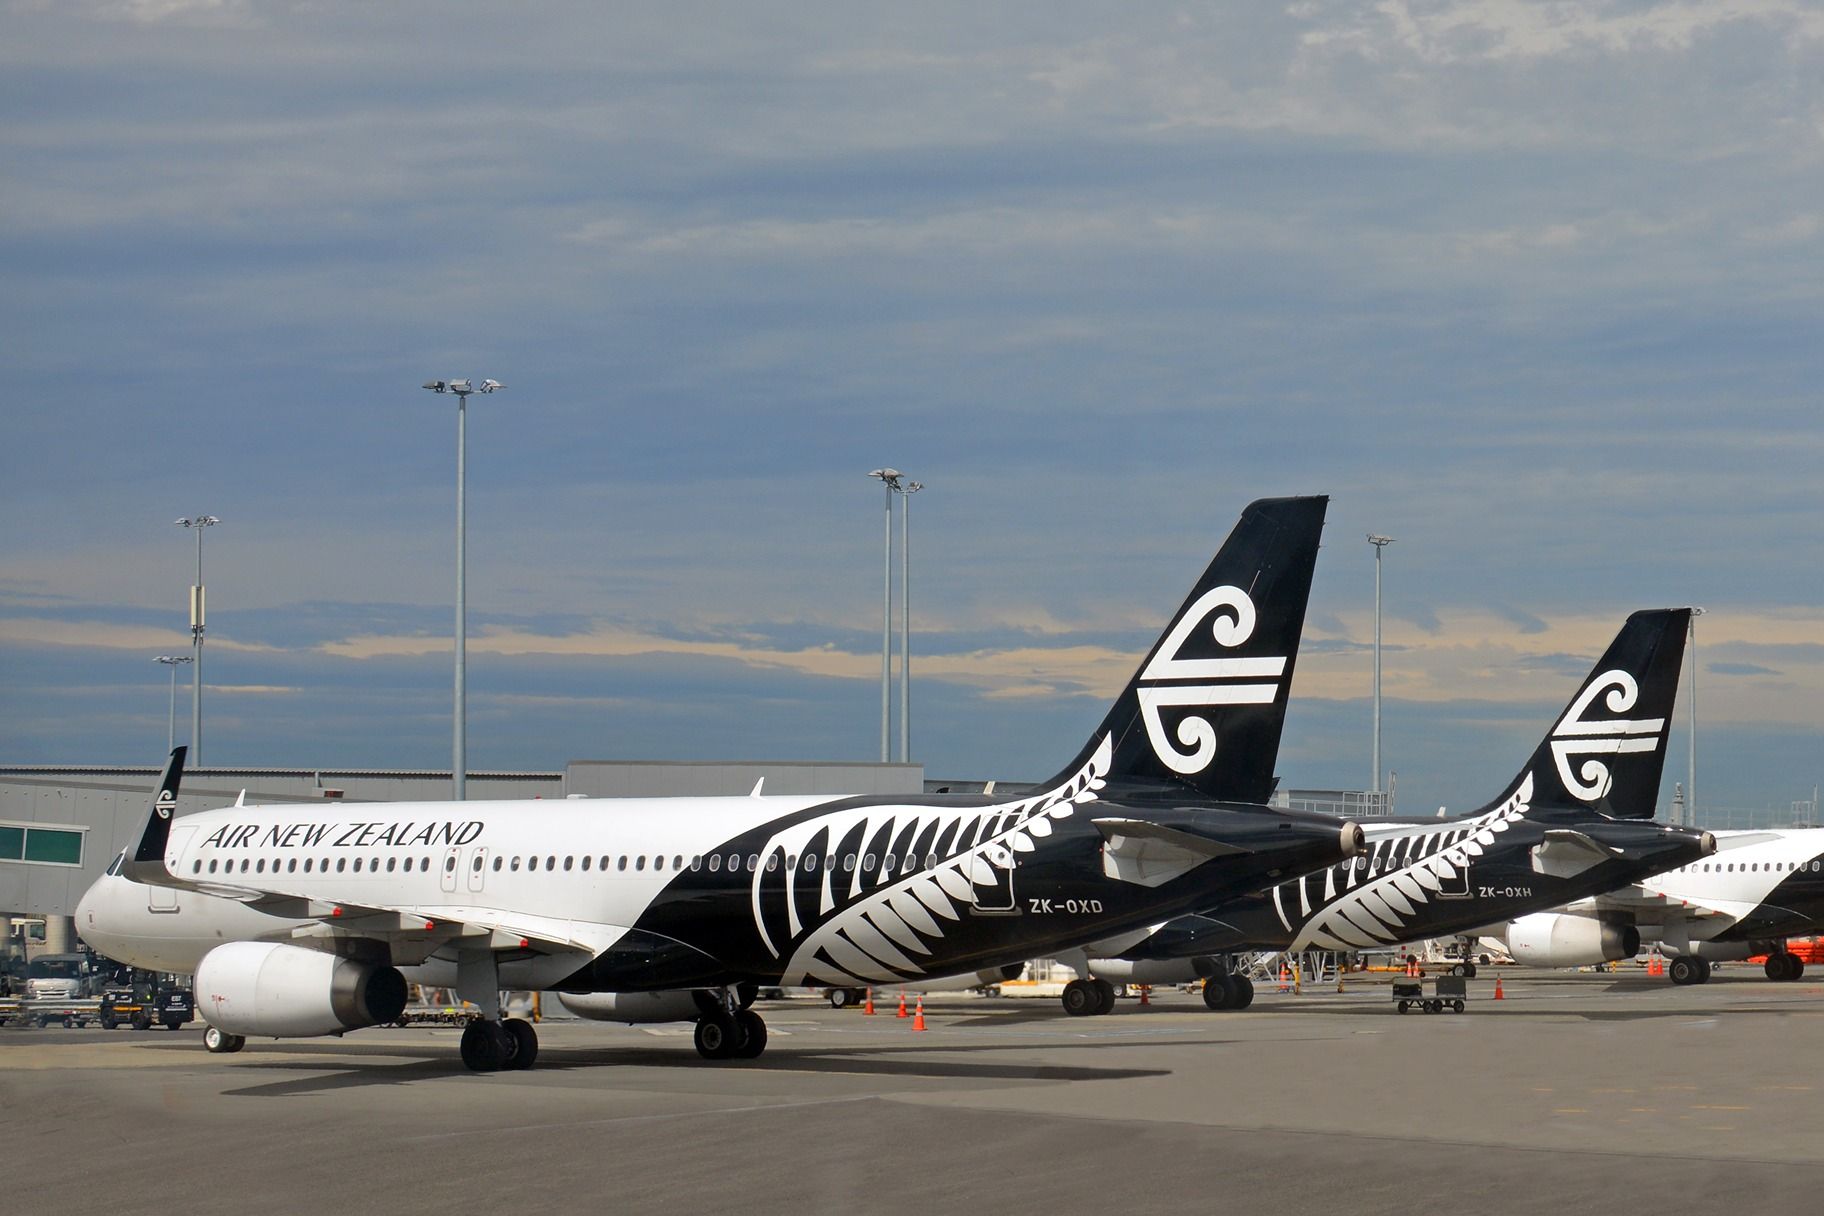 Air New Zealand aircraft in Christchurch